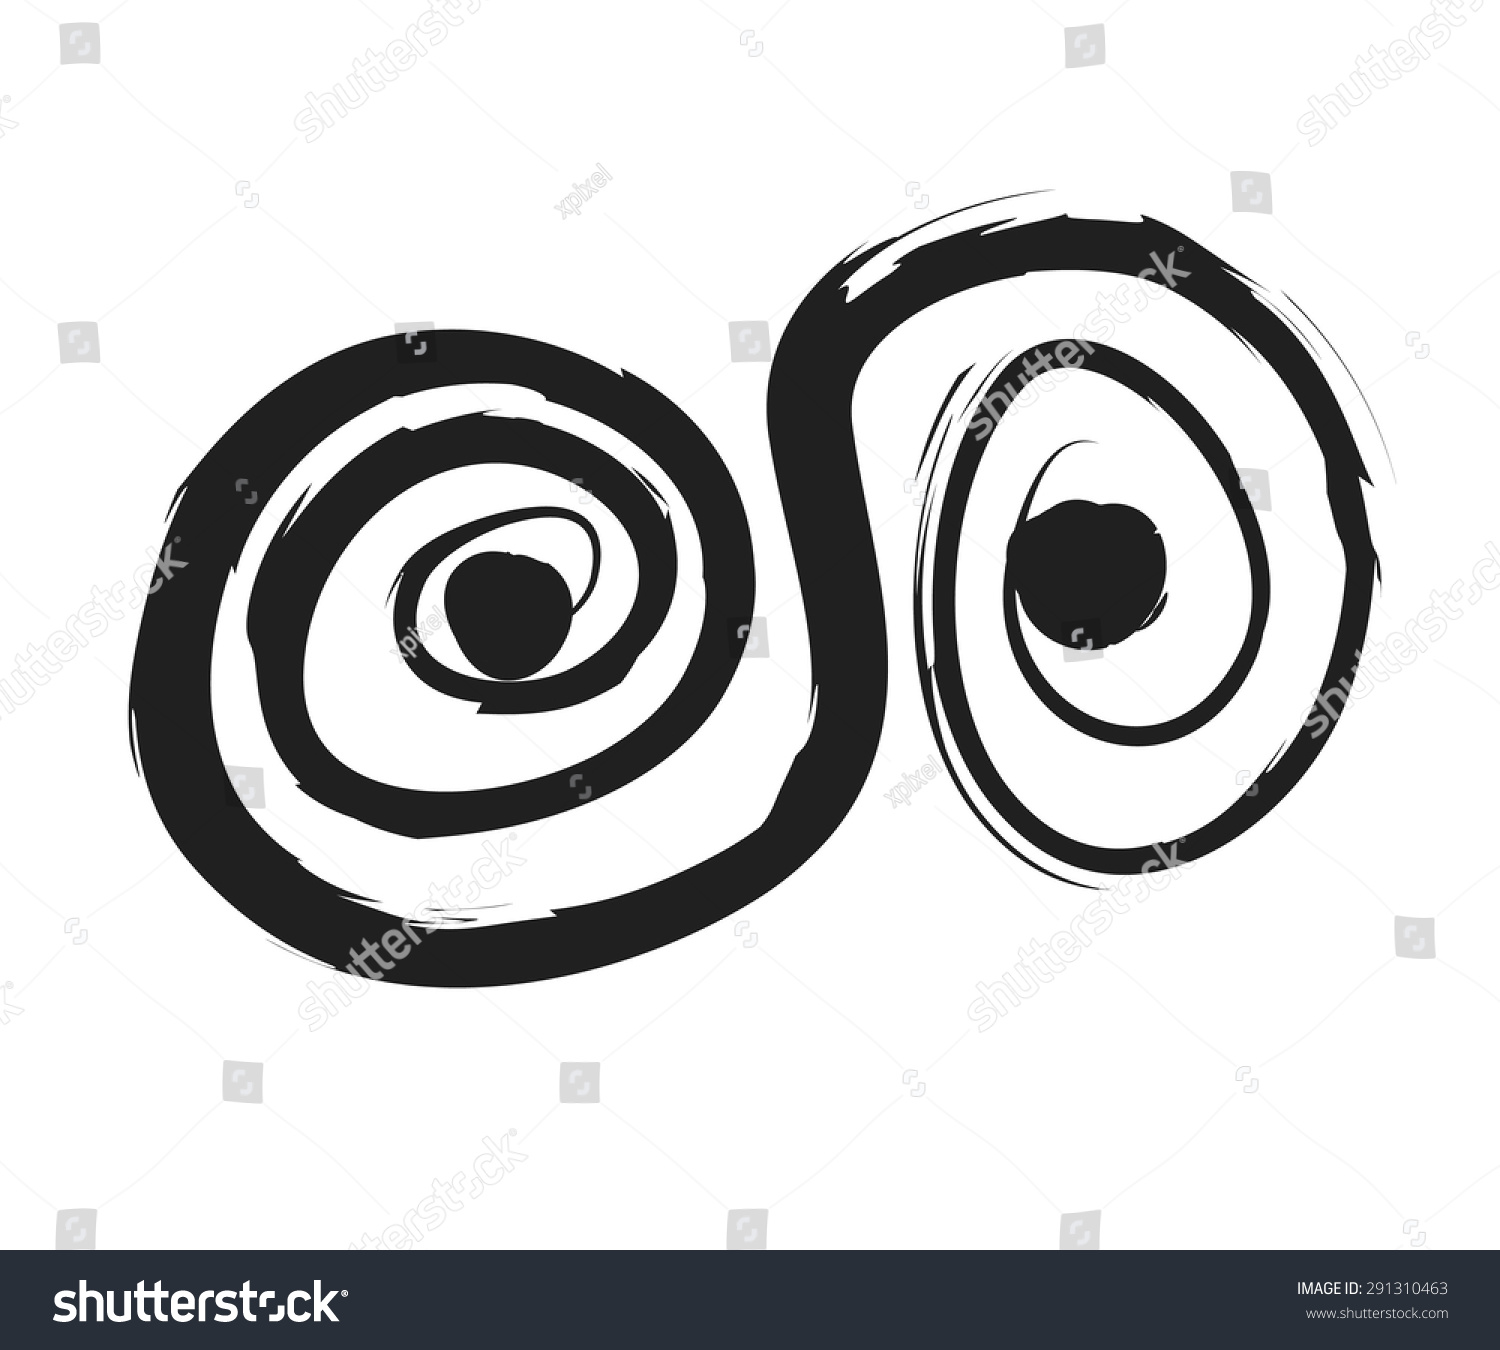 Doodle Eyes Vector Design Element - 291310463 : Shutterstock